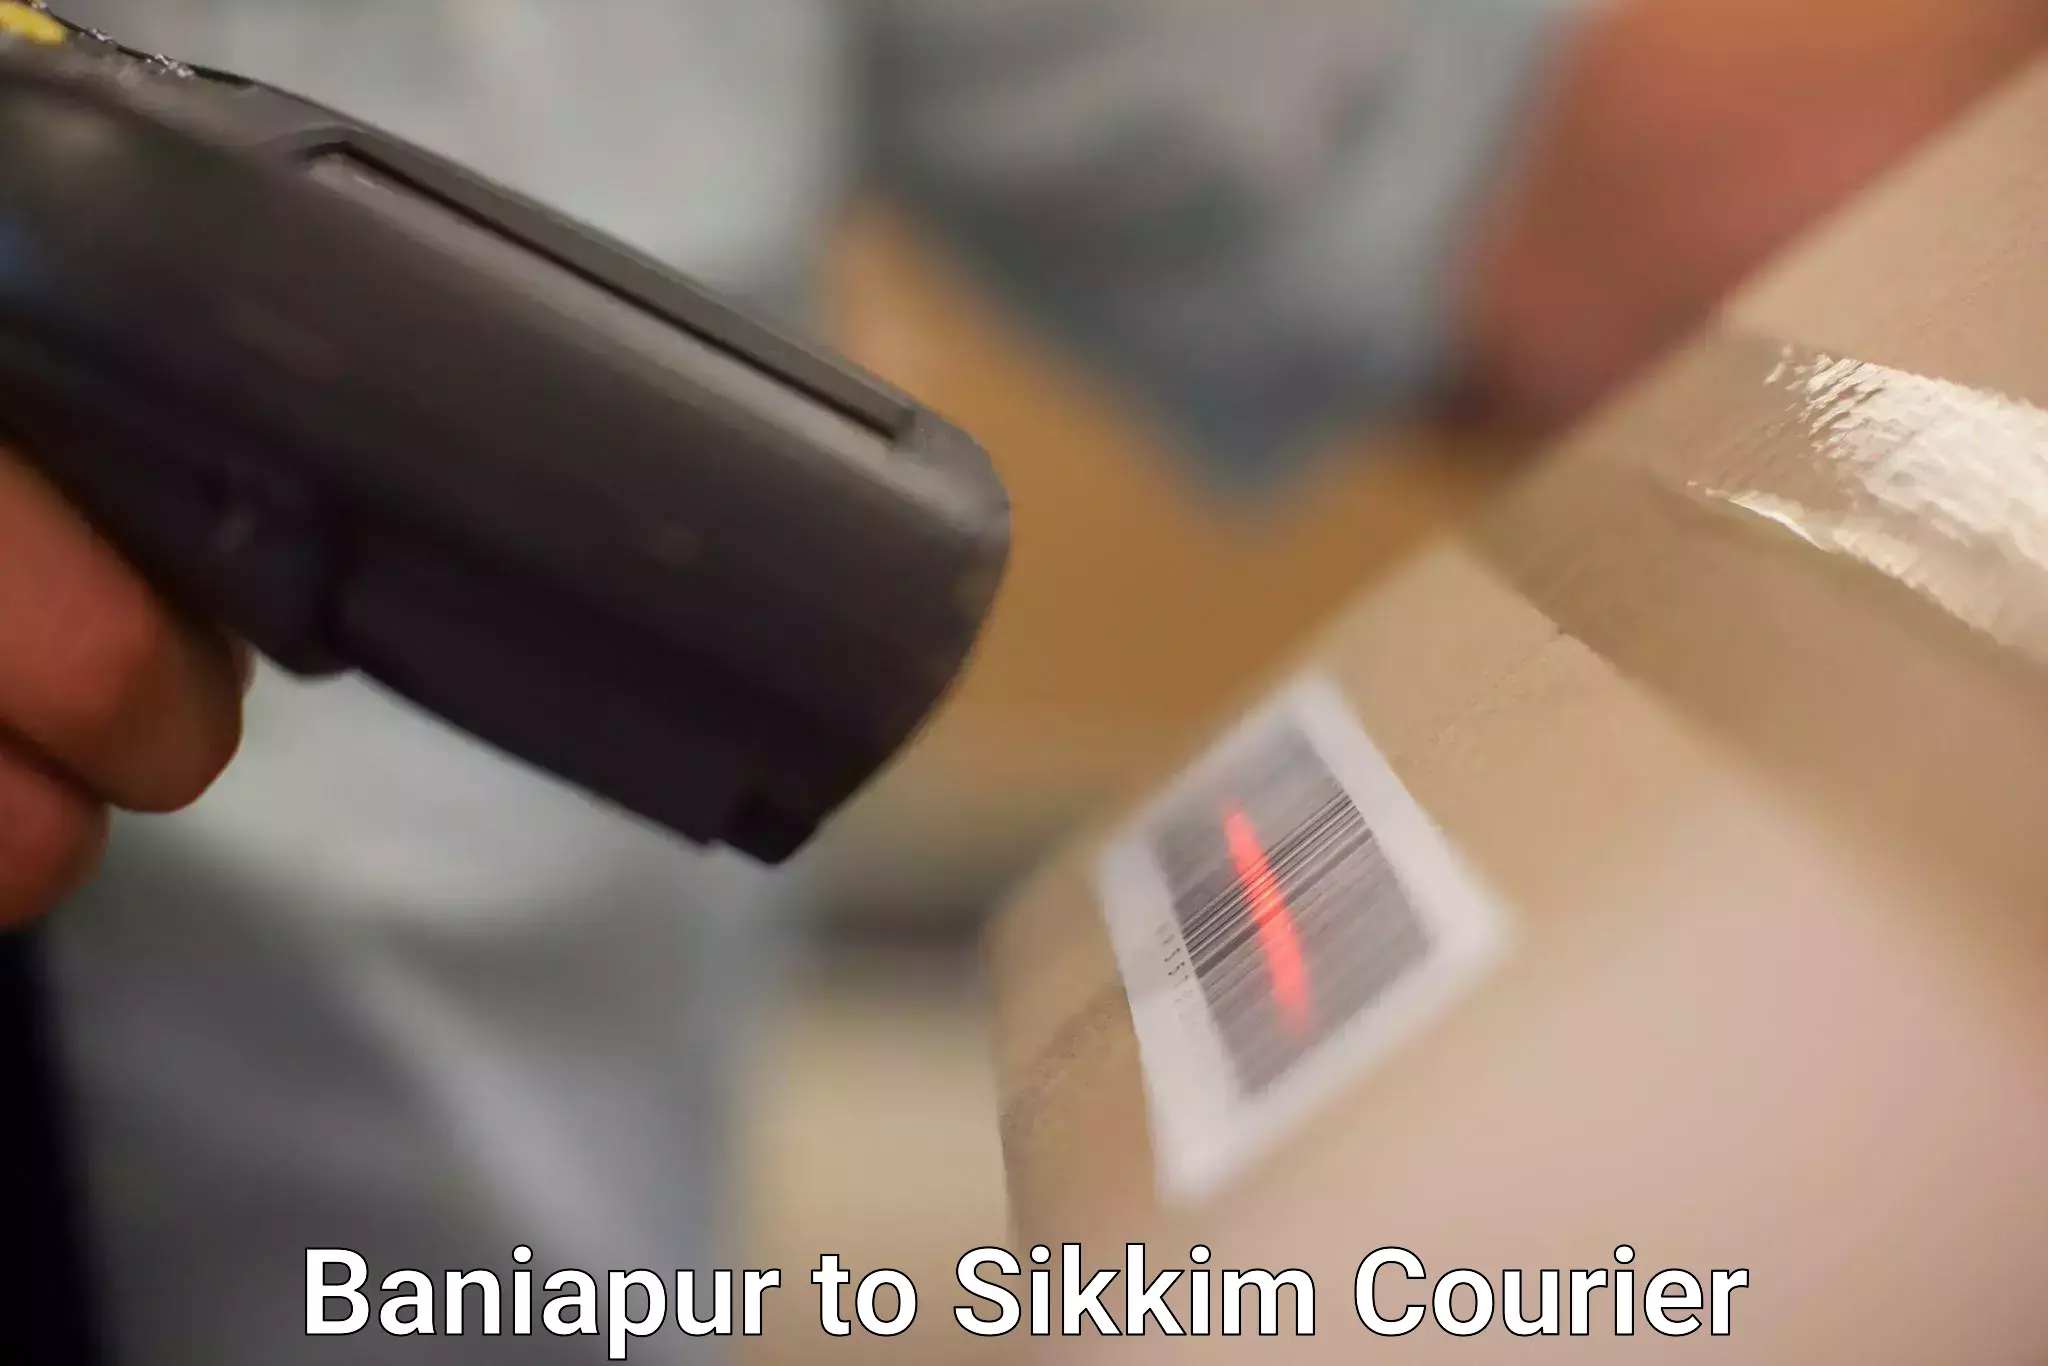 Courier service comparison Baniapur to Gangtok